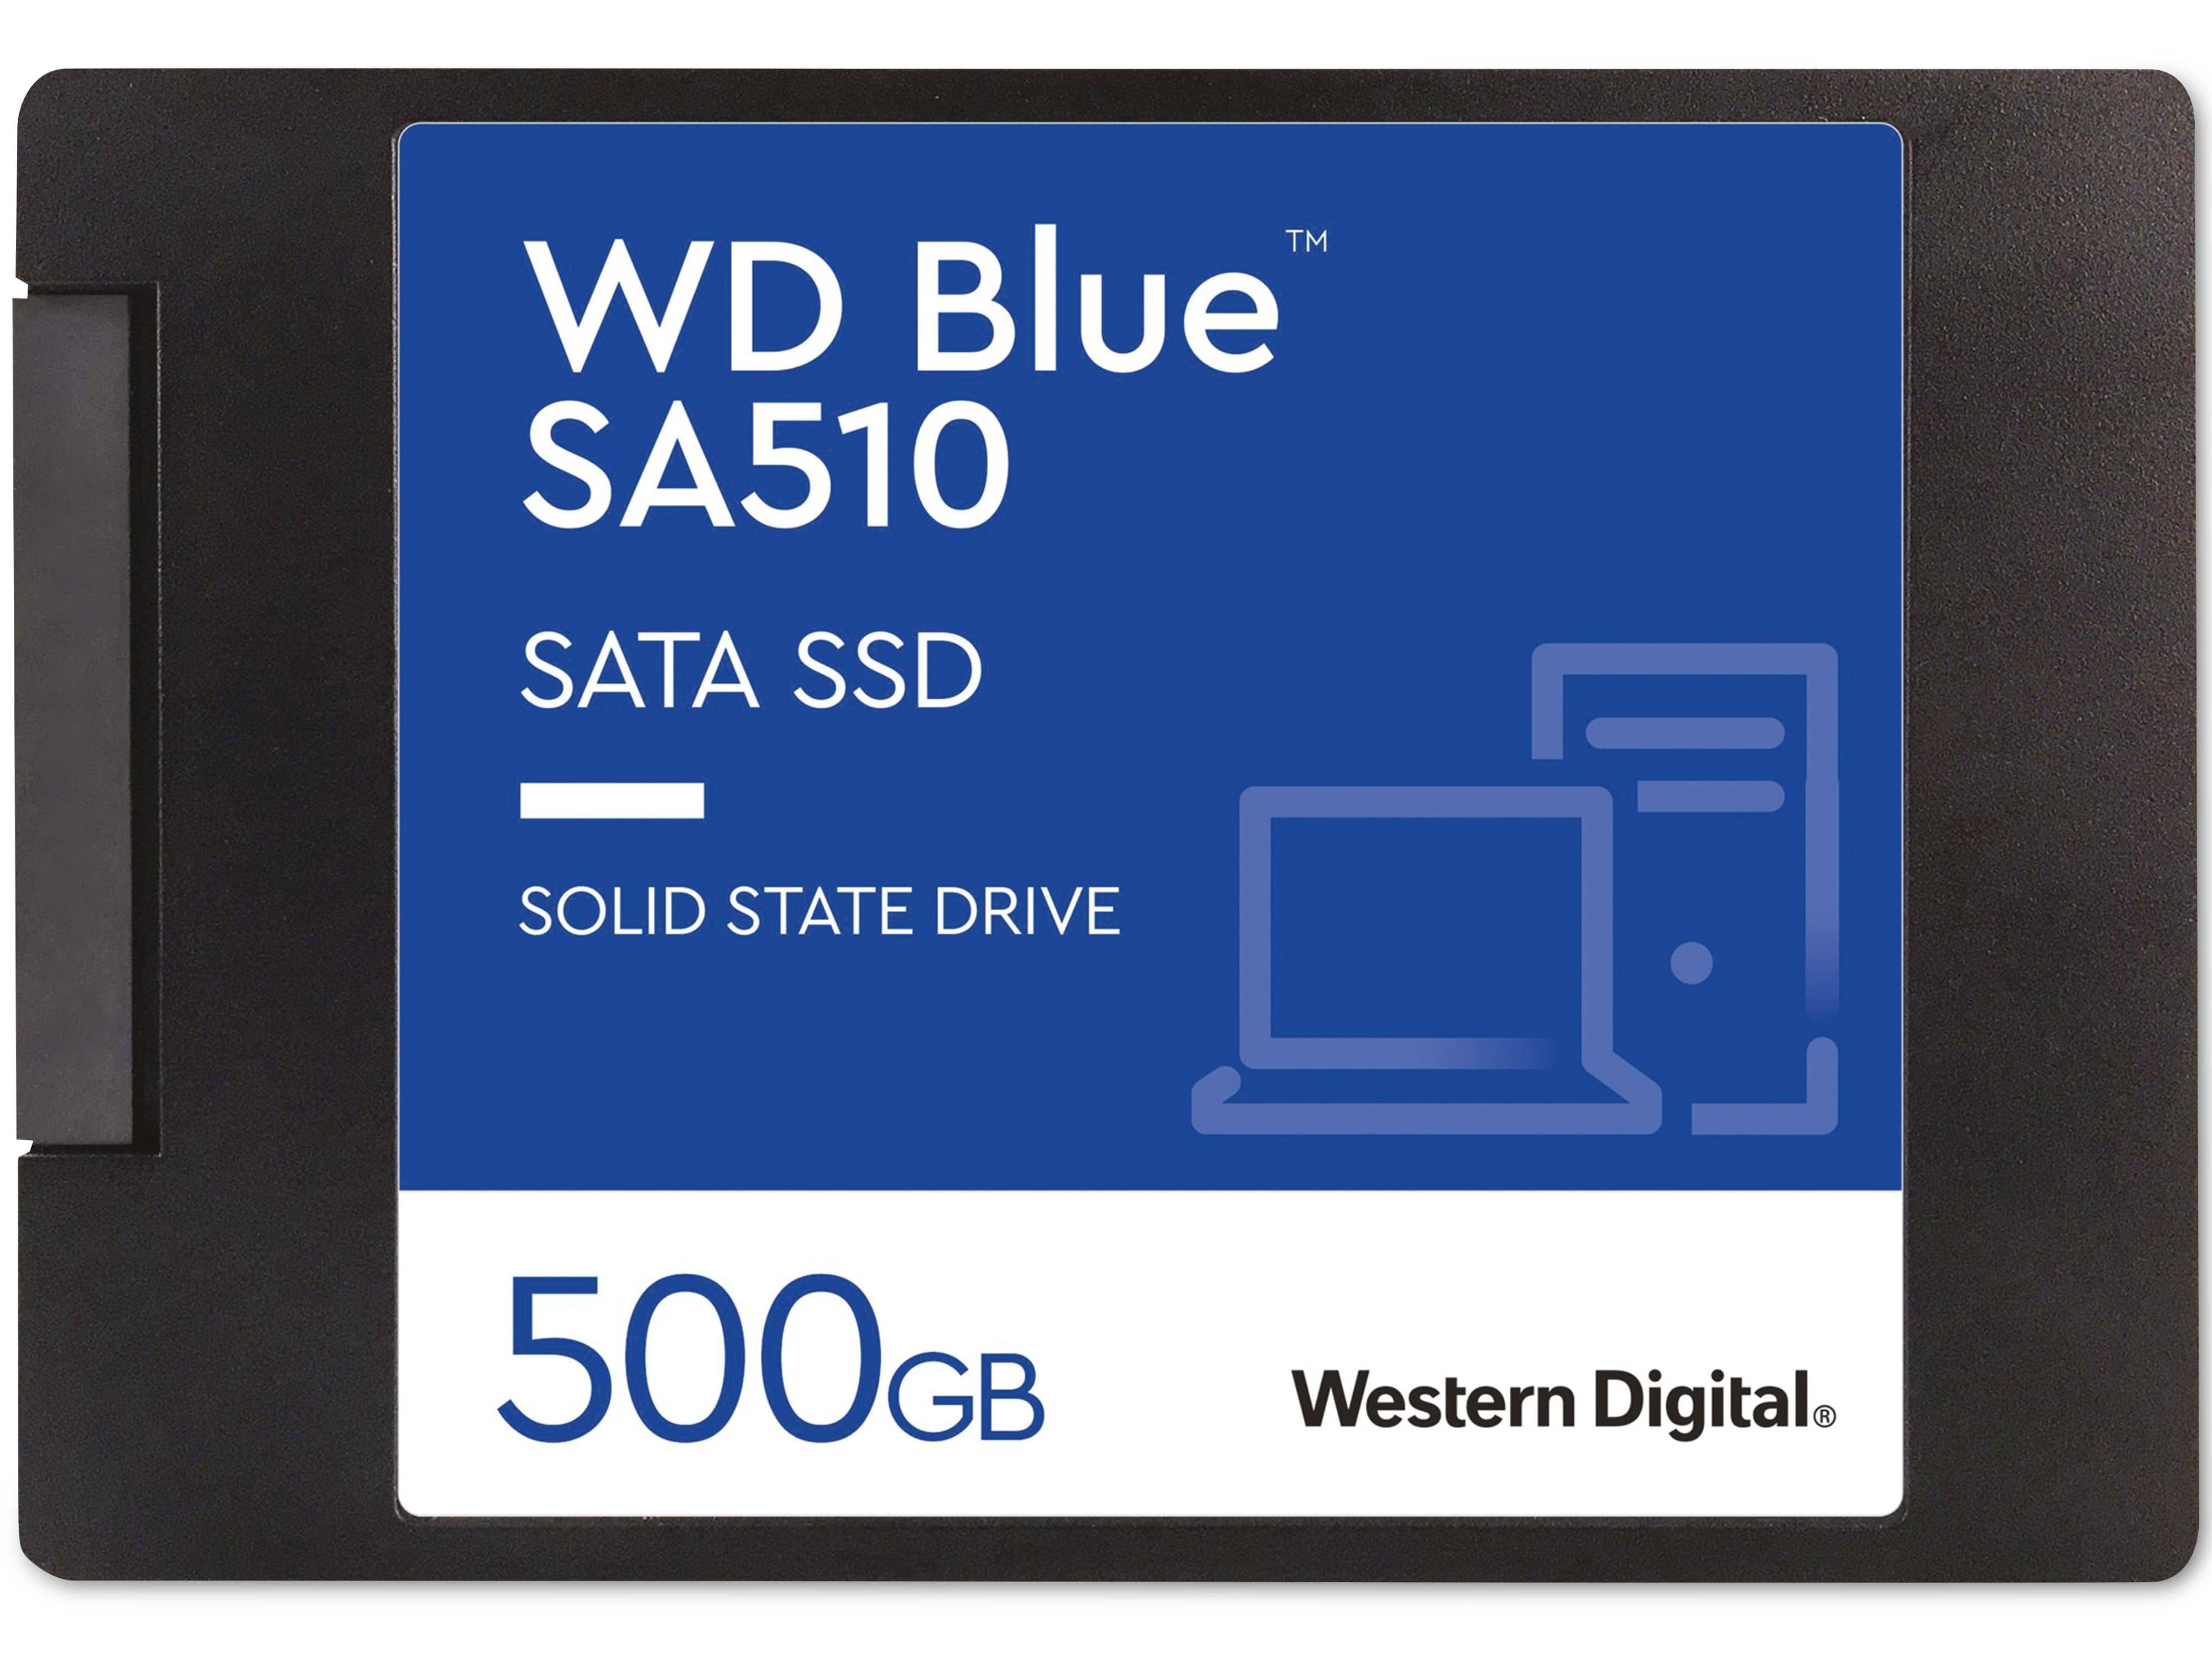 WESTERN DIGITAL SATA-SSD 500 Blue WD SA510